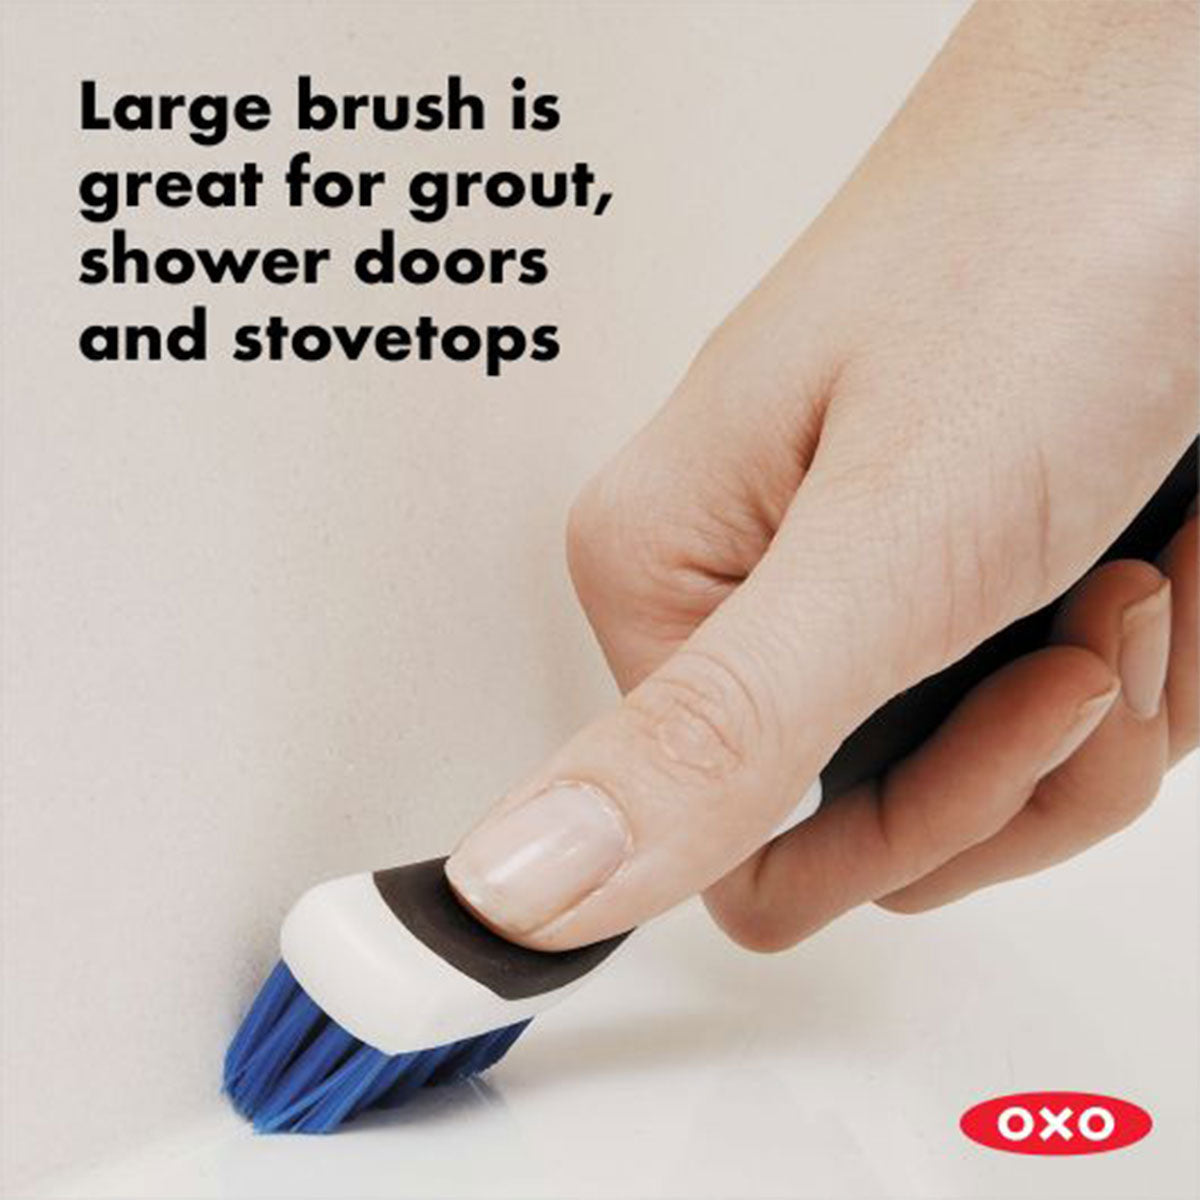 Juego de cepillos de limpieza profunda para baño OXO (2 cepillos, azul